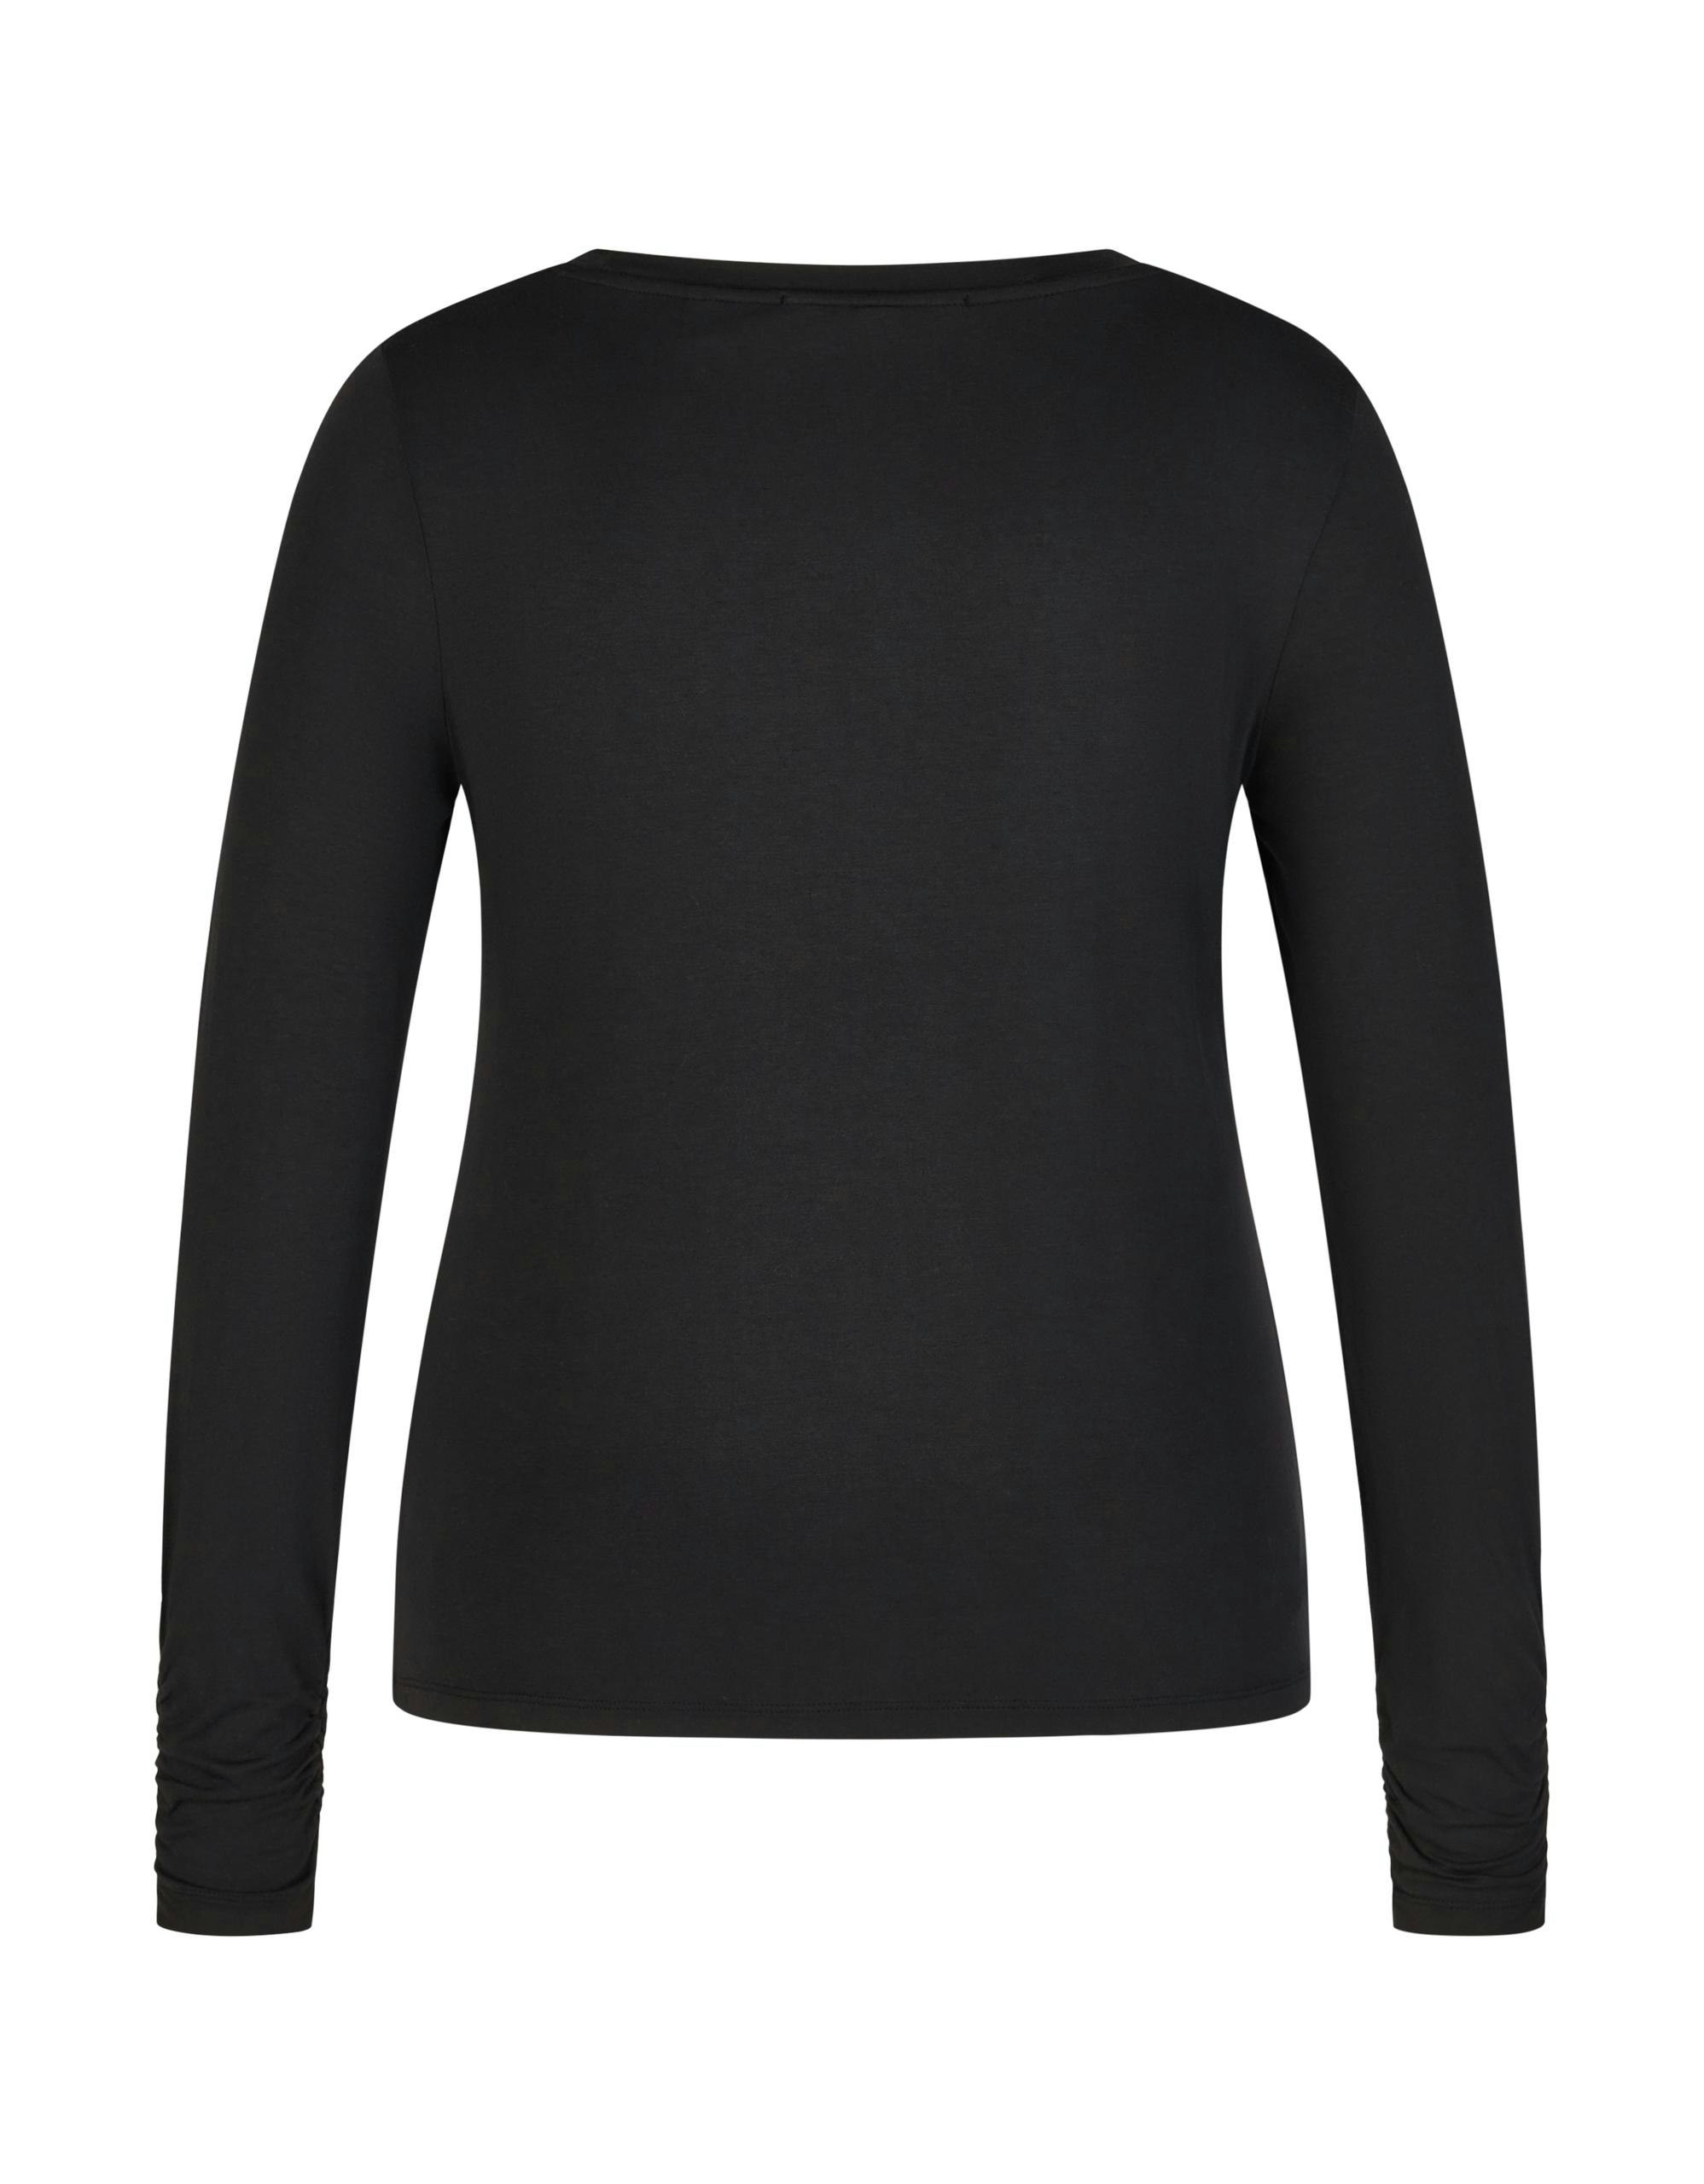 Langarmshirt in Woman Unifarbe | Mode Steilmann ADLER Onlineshop 